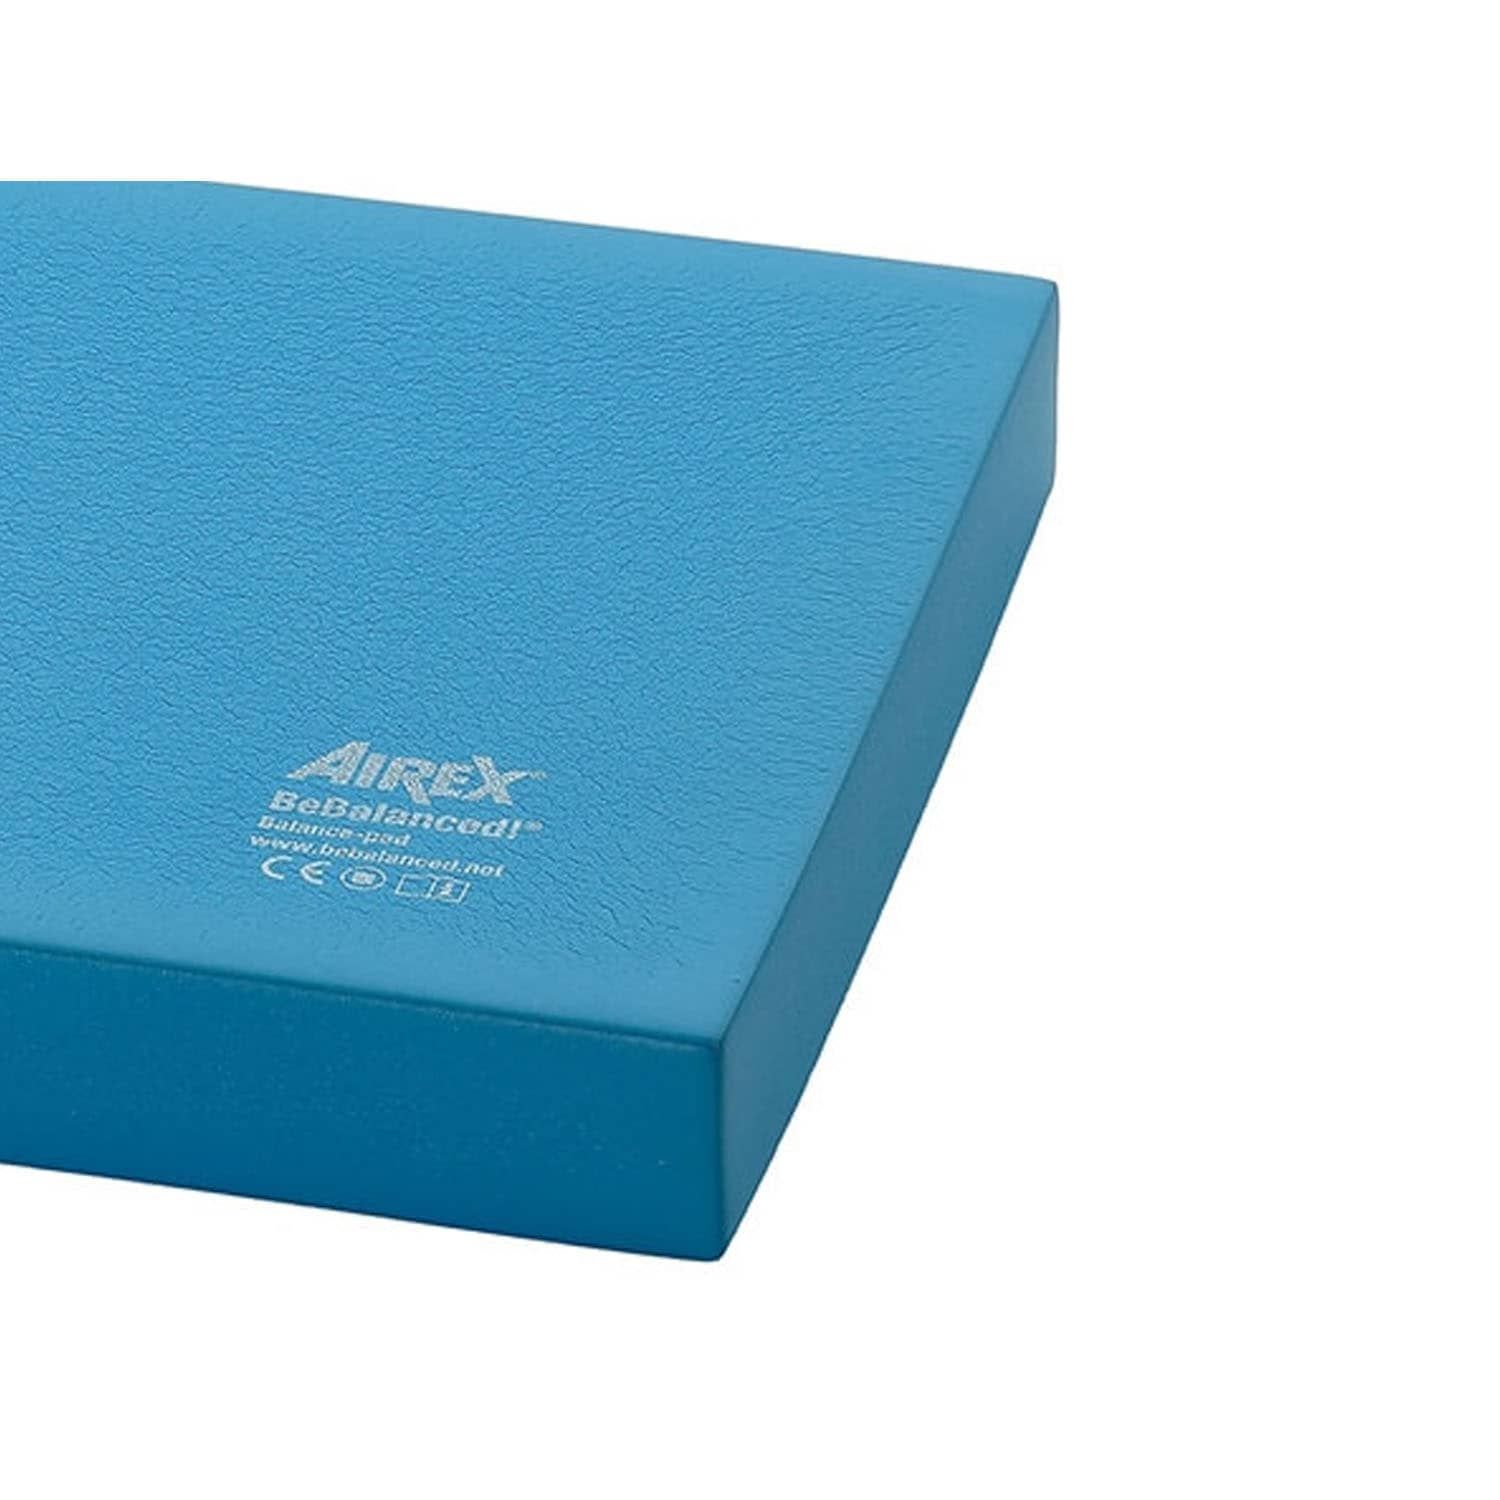 AIREX Balance-Pad Elite buy online